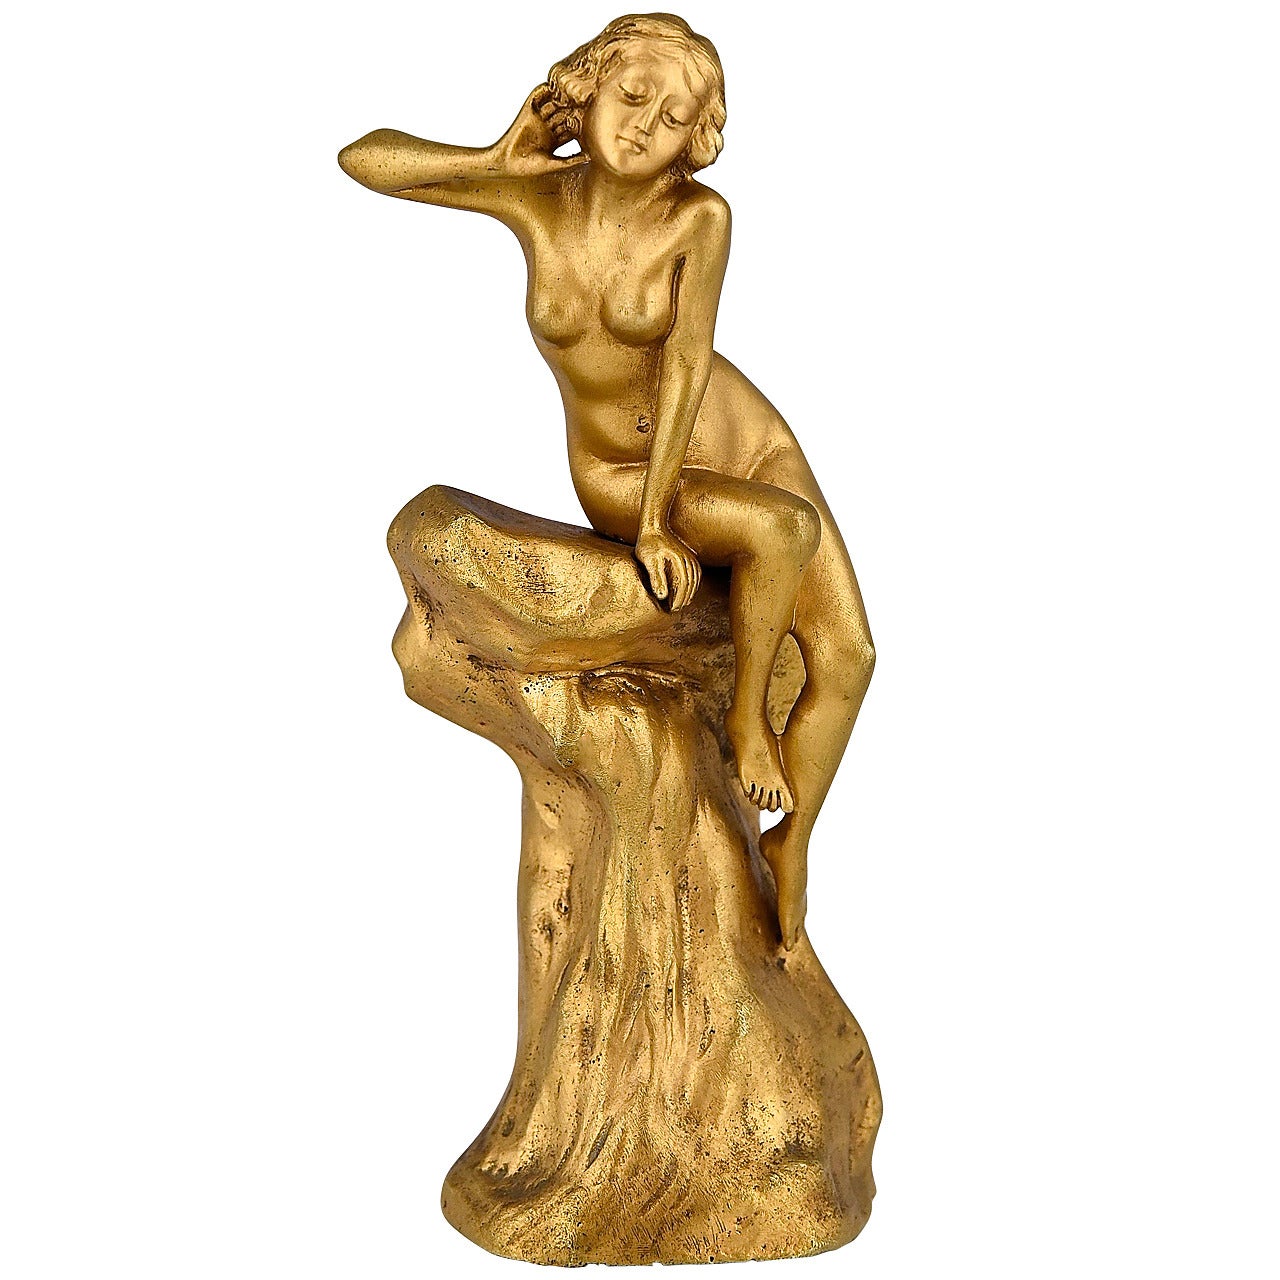 Art Nouveau Gilt Bronze Sculpture of a Nude by Affortunato Gory, France, 1910